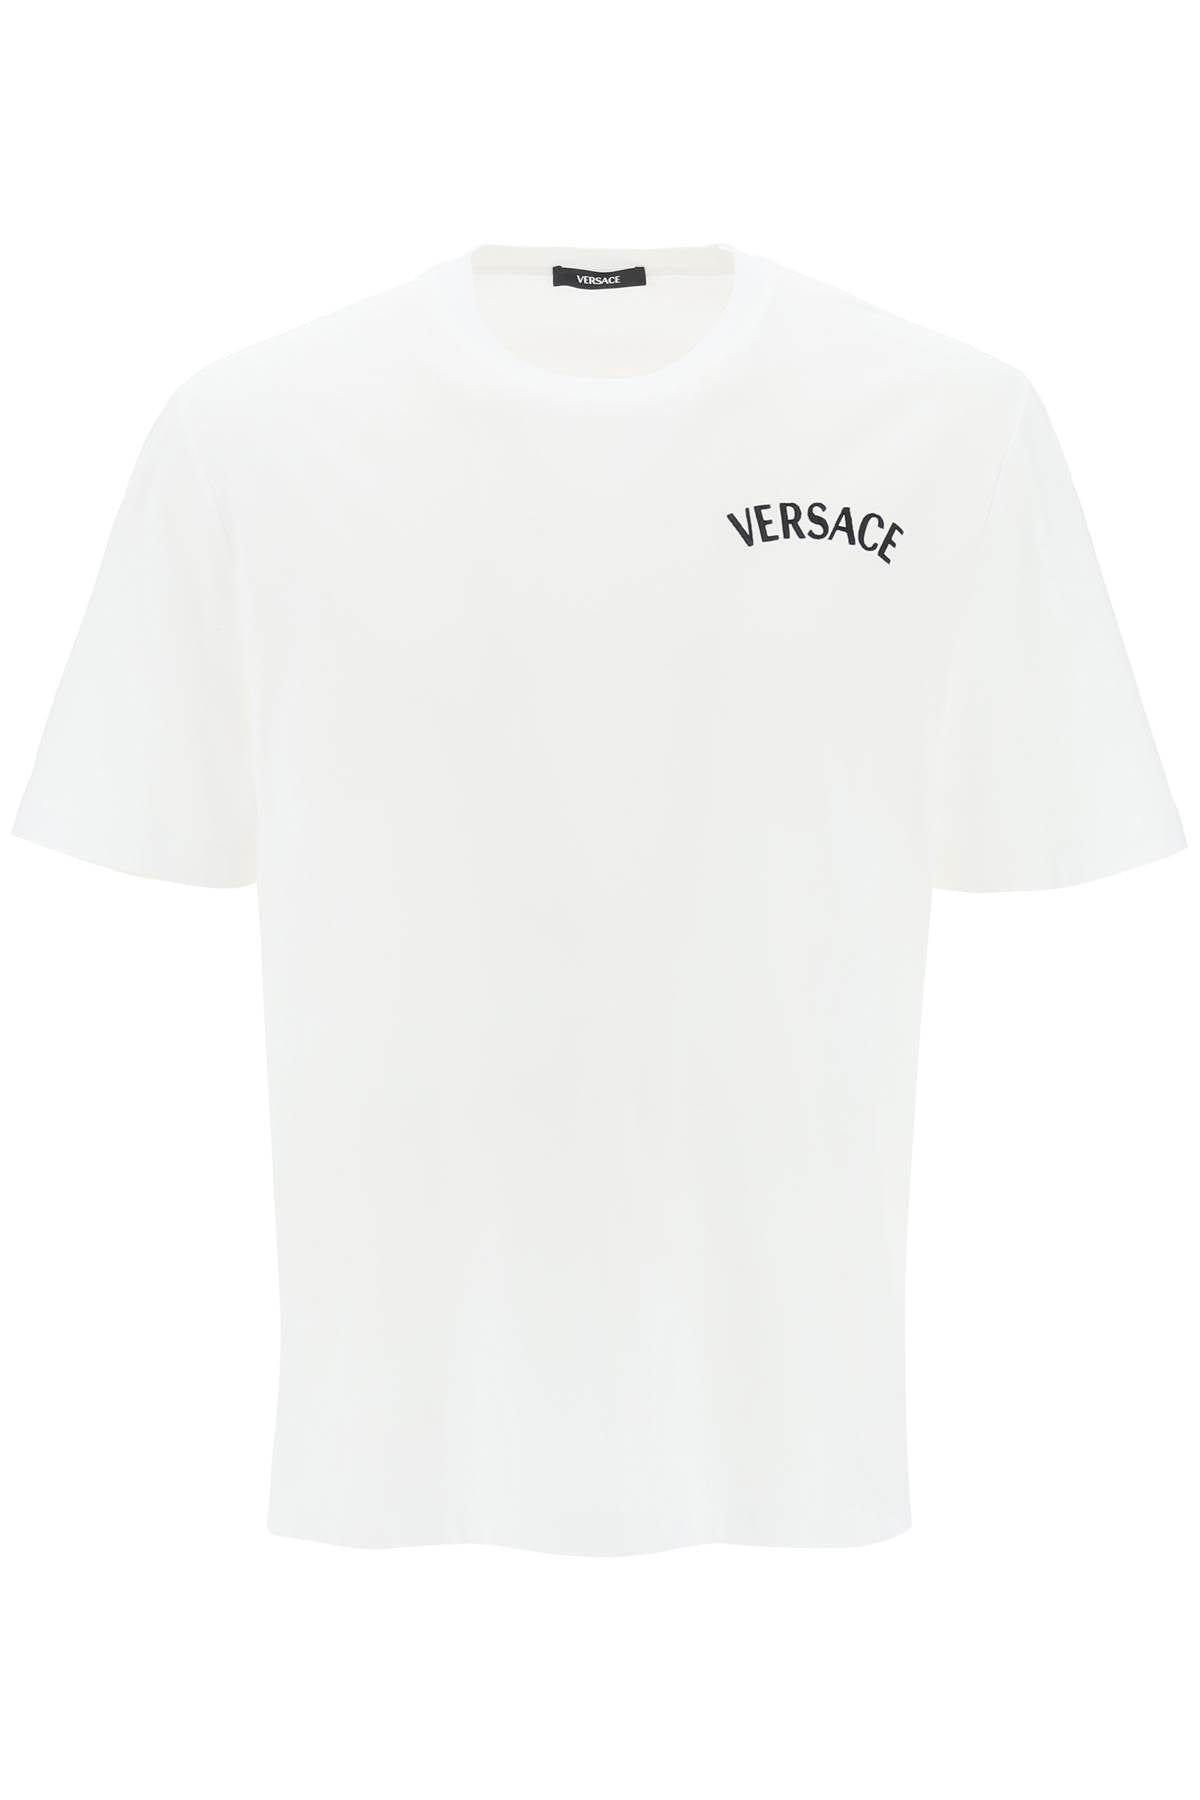 Versace 米蘭郵票圓領 T 卹 1013302 1A09865 白色